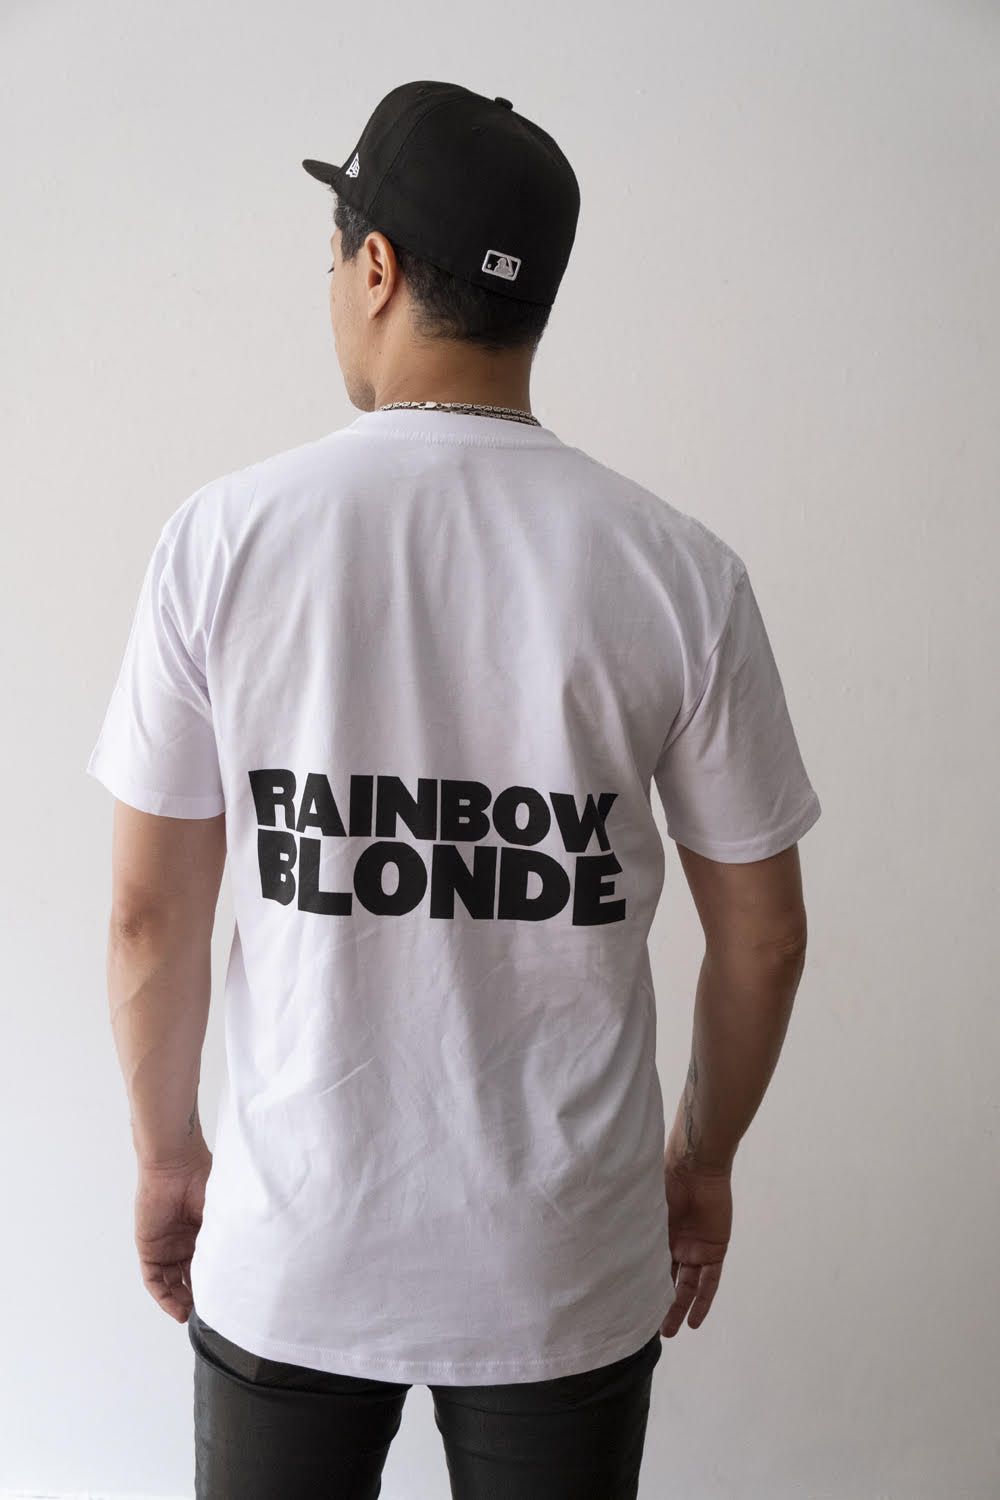 Rainbow Blonde - Limited Edition T-Shirt